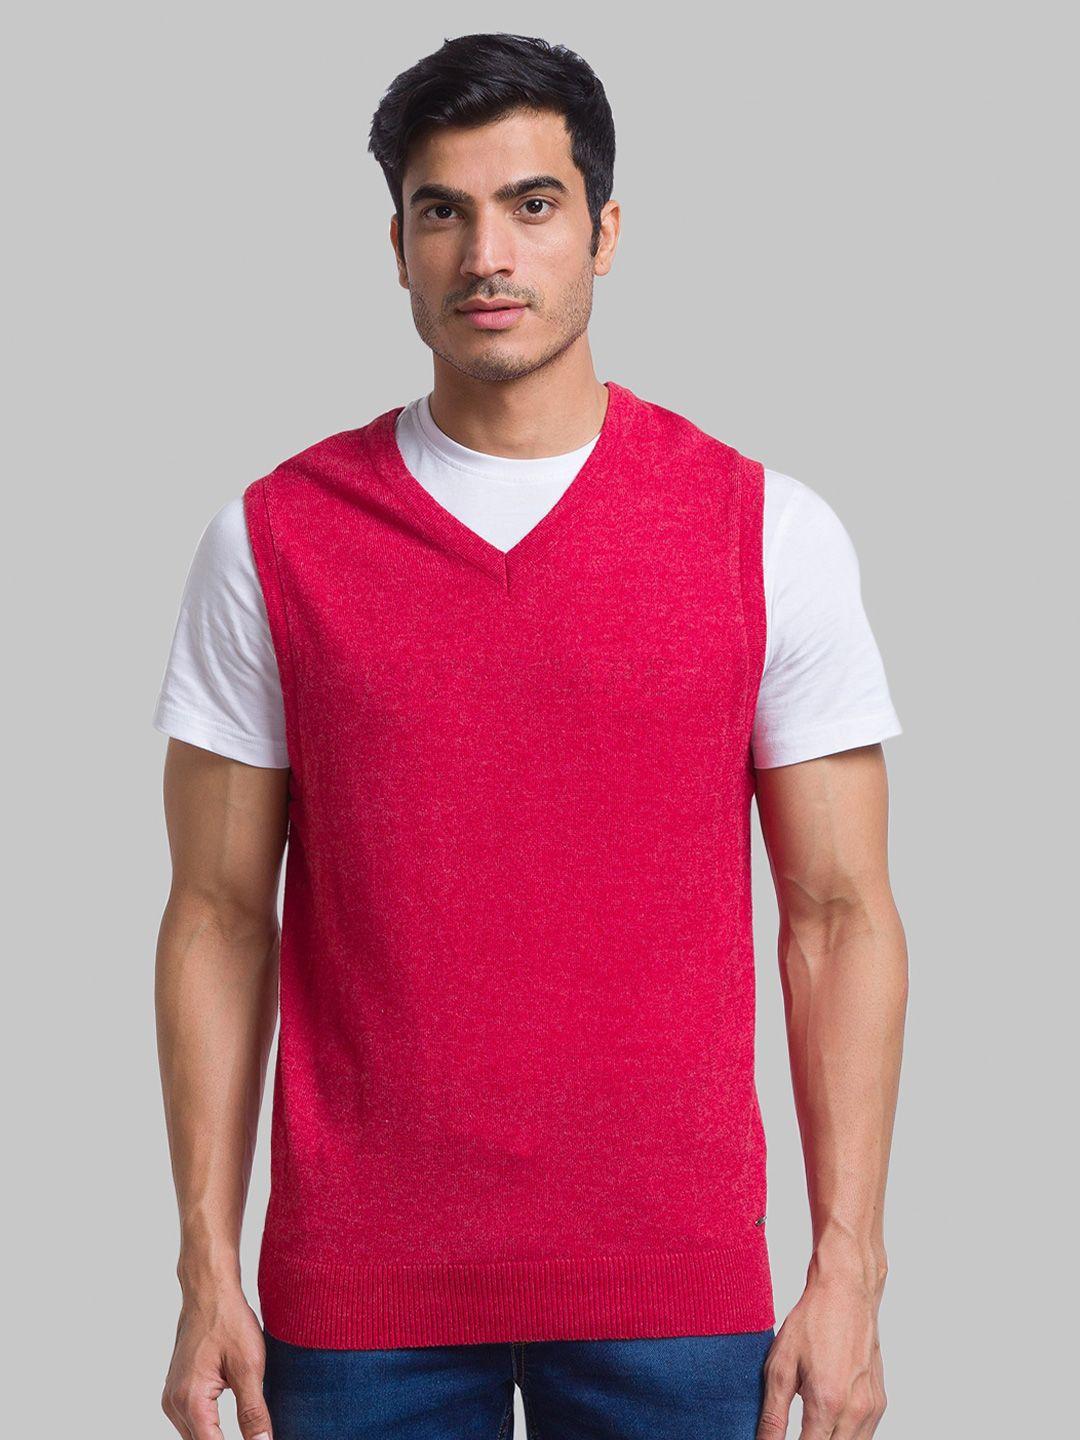 parx-men-sleeveless-pullover-wool-sweater-vest